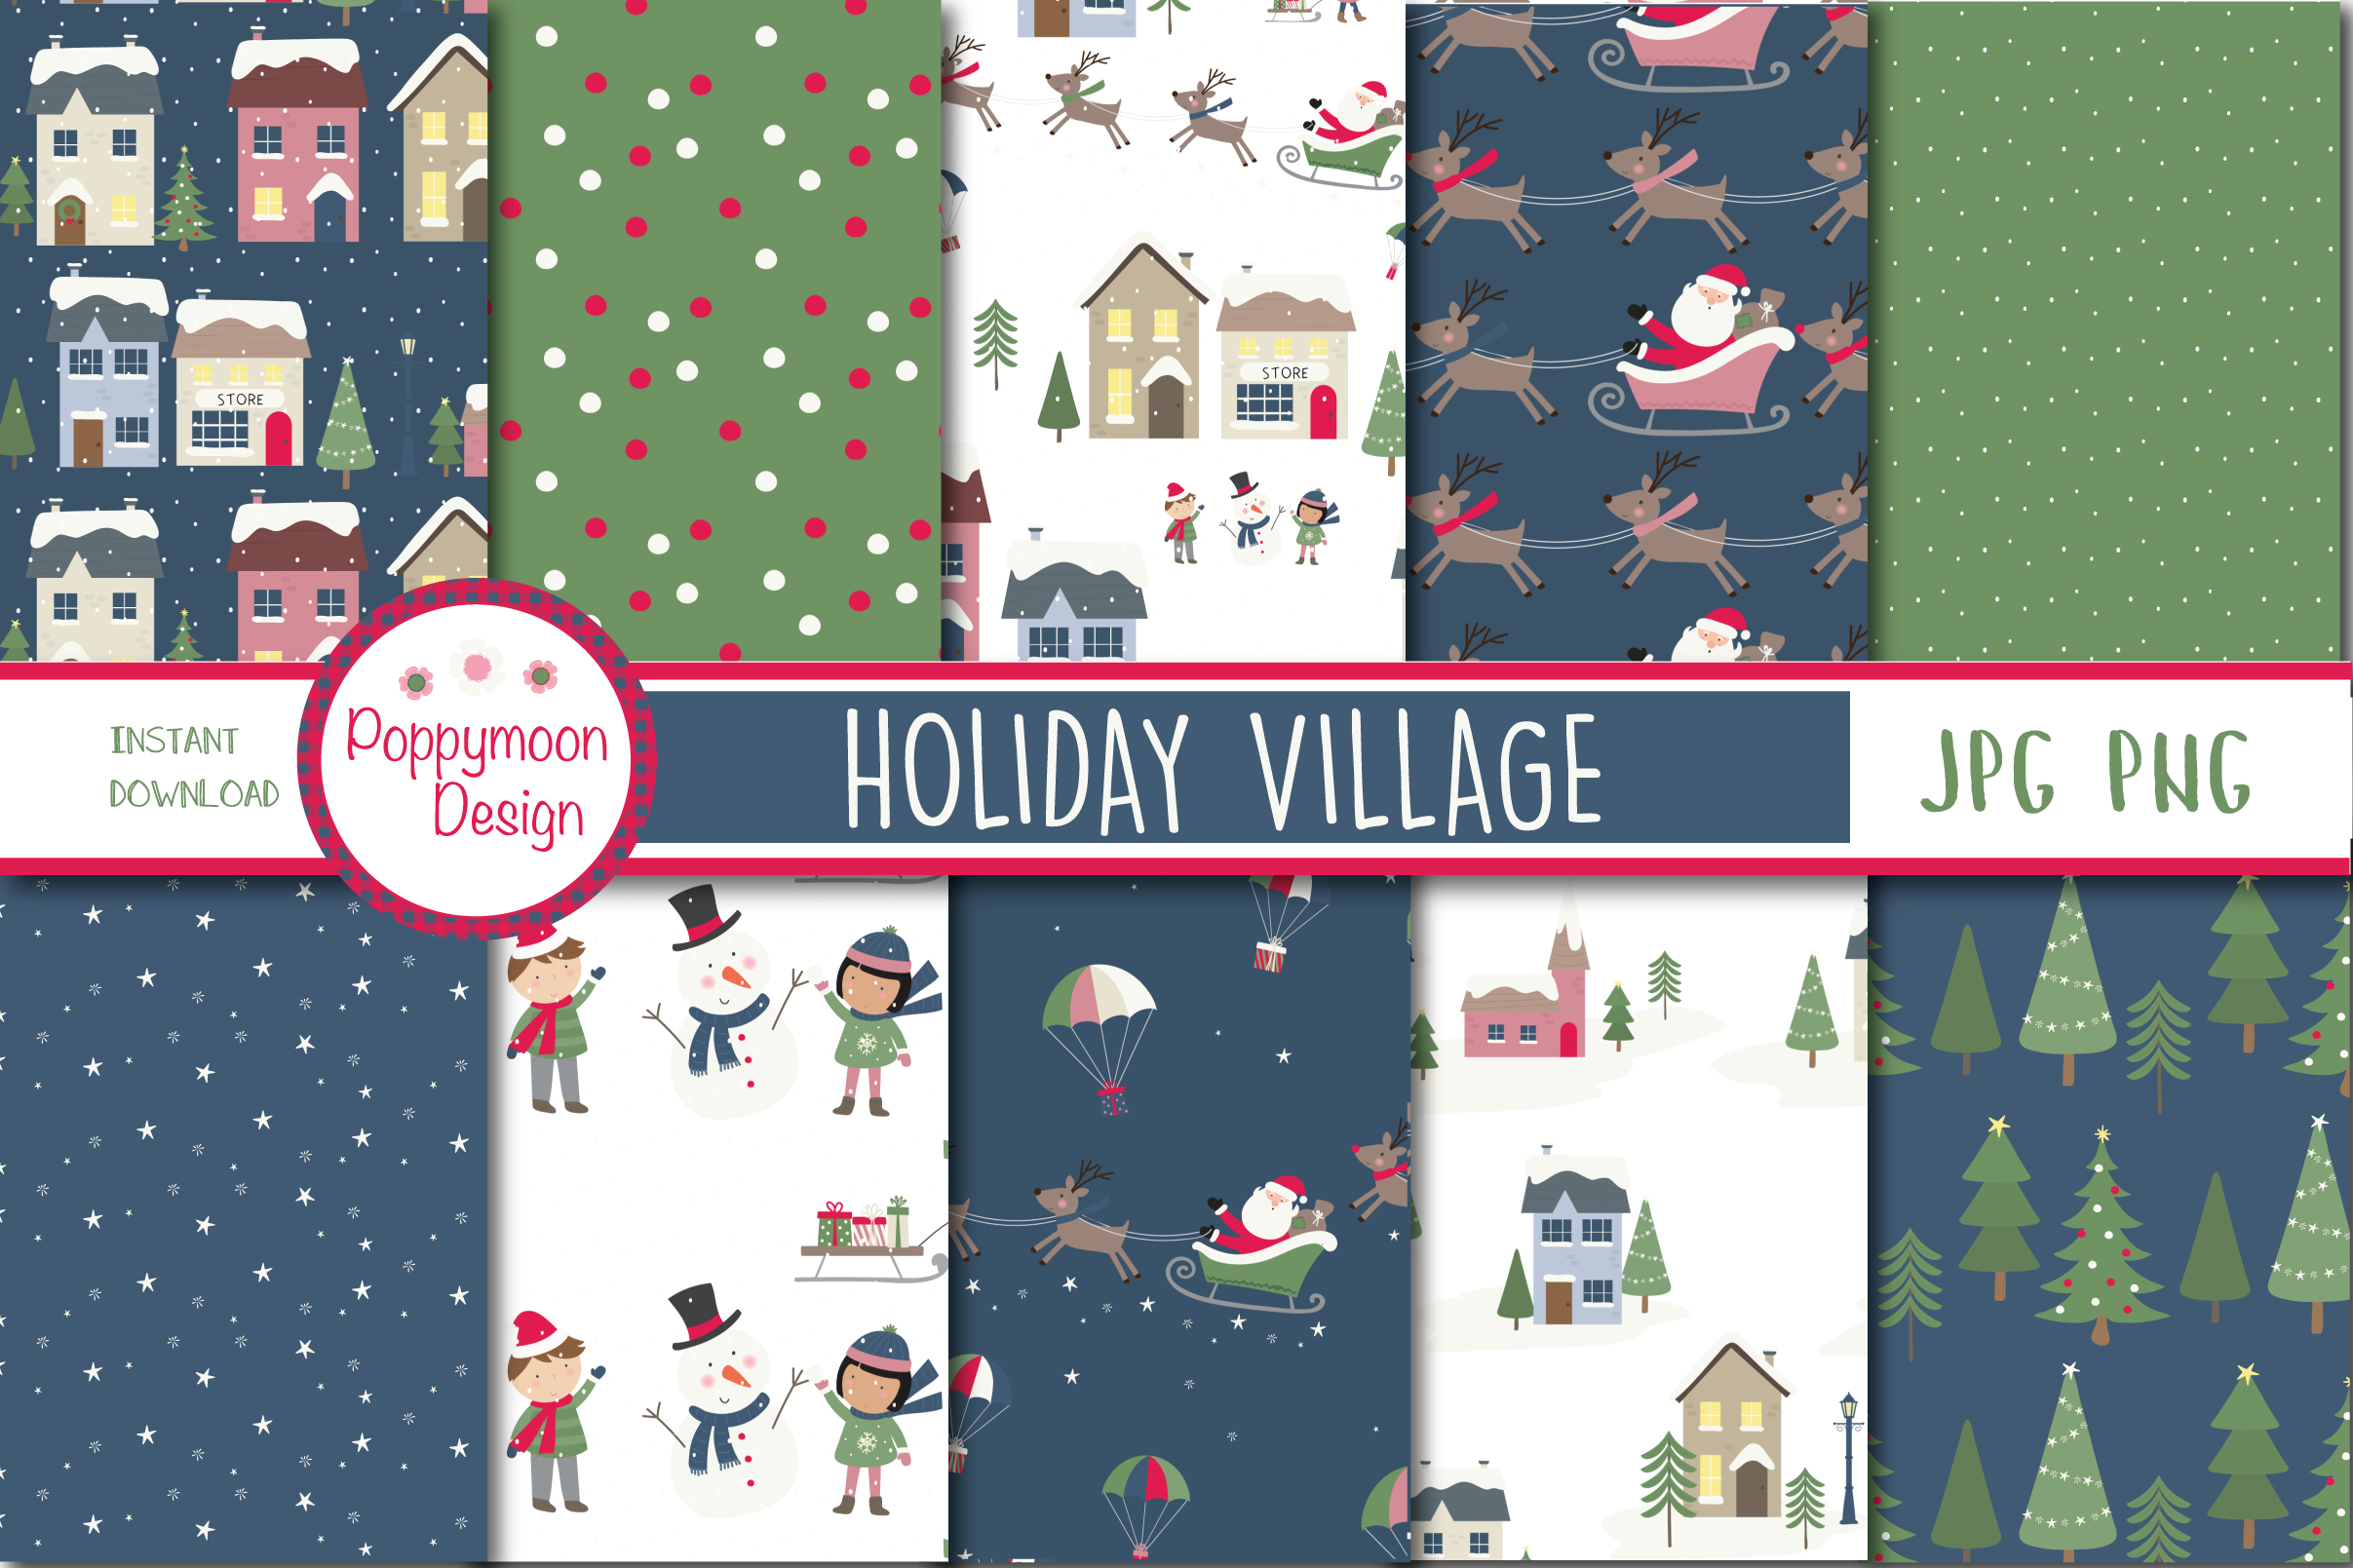 Holiday Village Paper By Poppymoon Design Thehungryjpeg Com